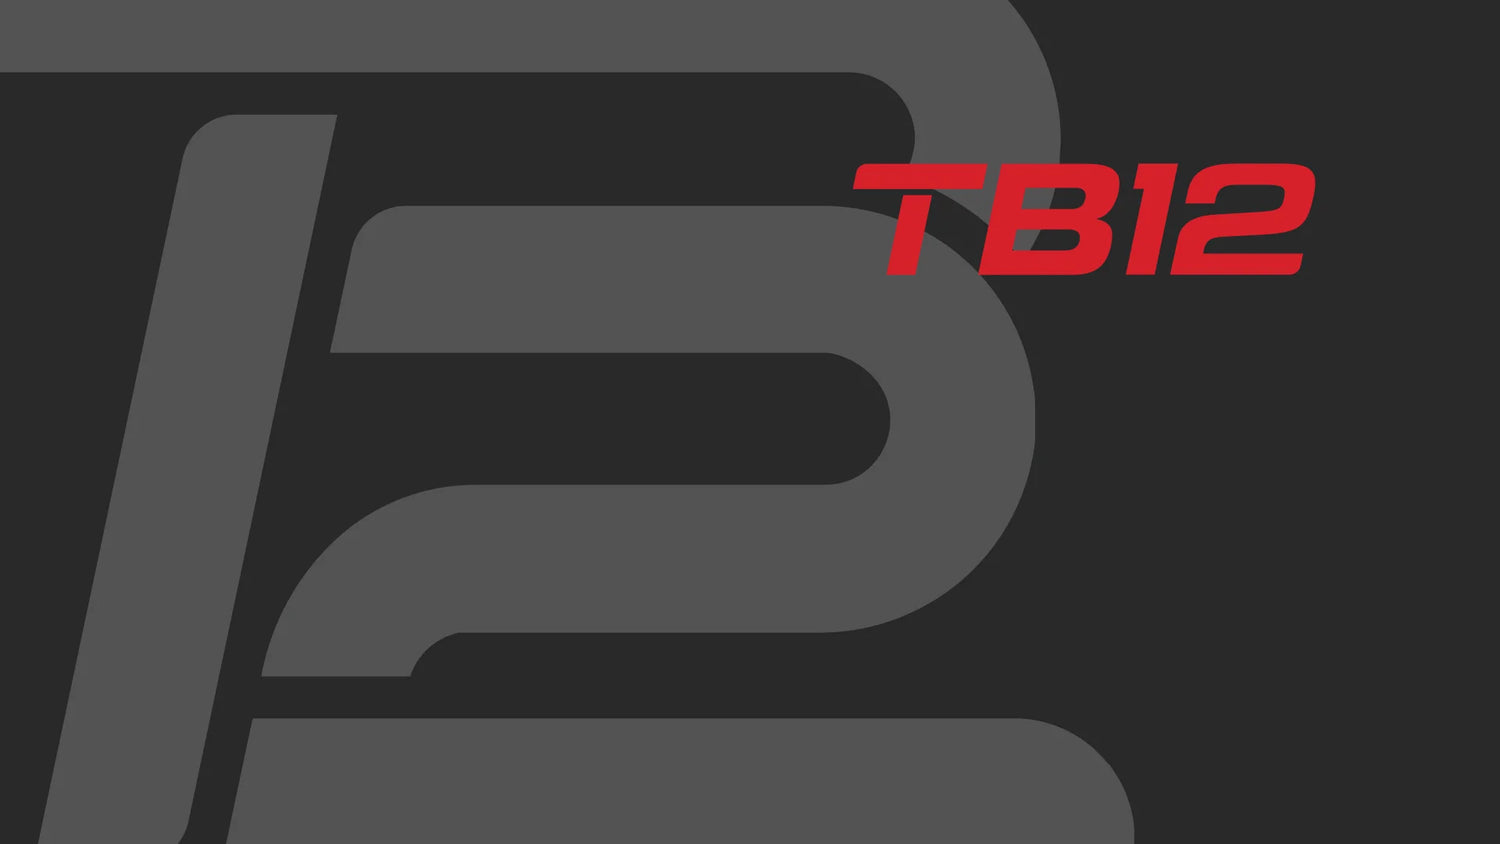 TB12 wordmark and TB12 logo on a black background